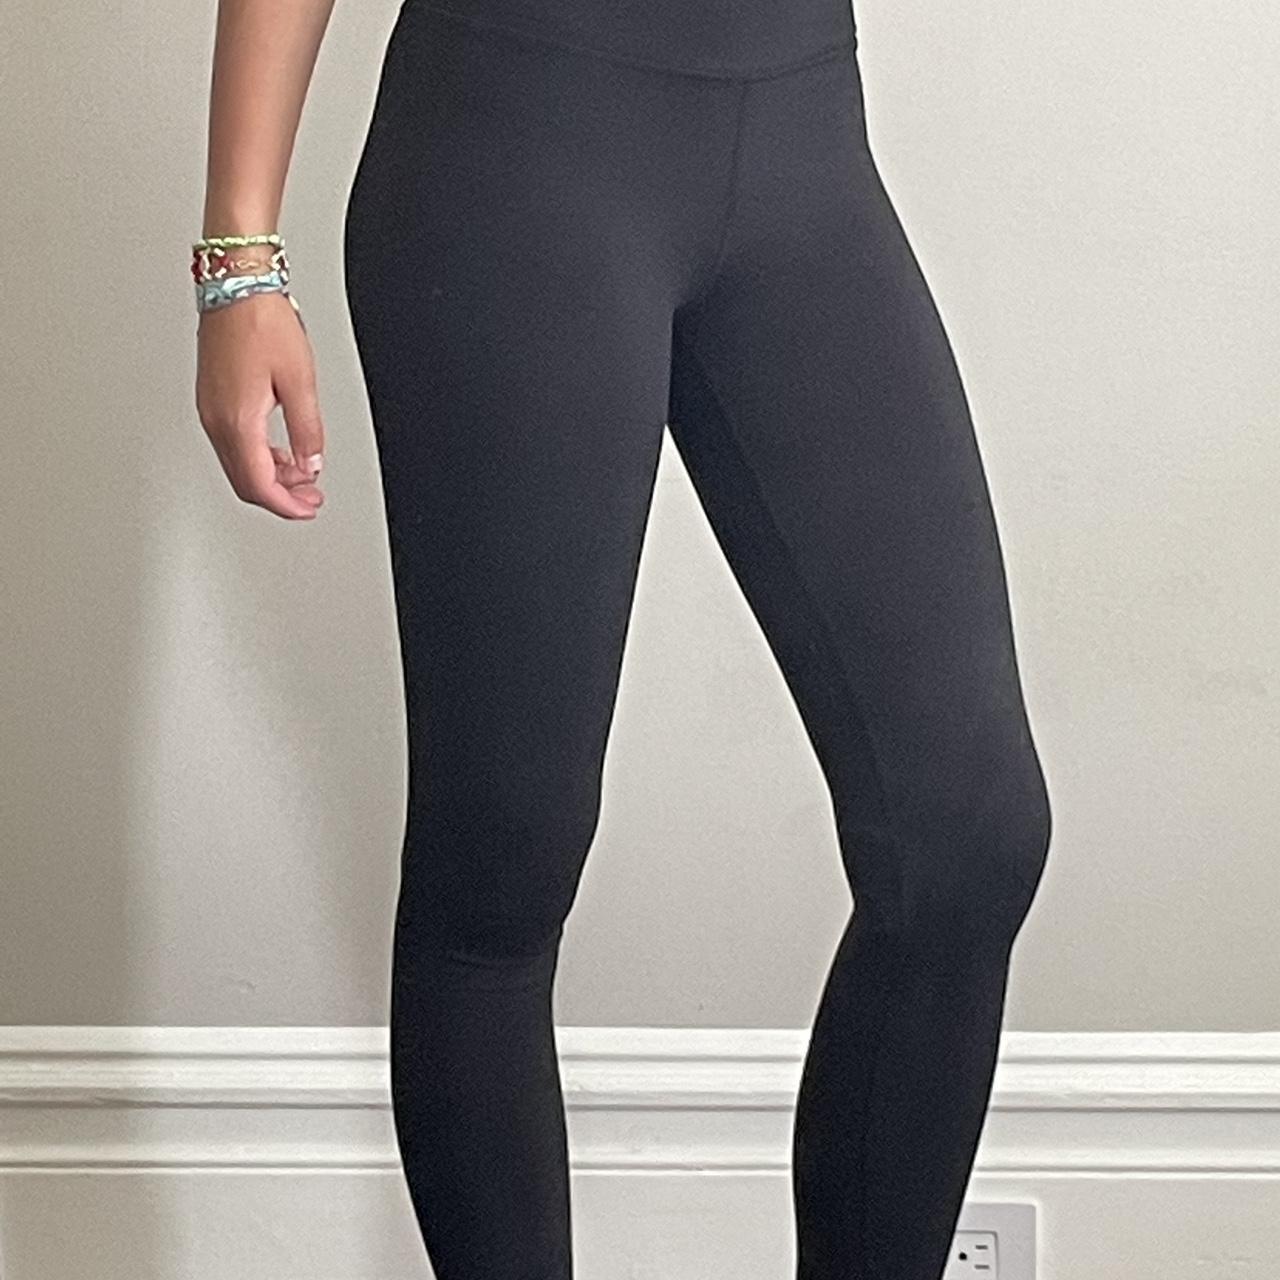 black 7/8 leggings from nordstrom in girls sizing. - Depop